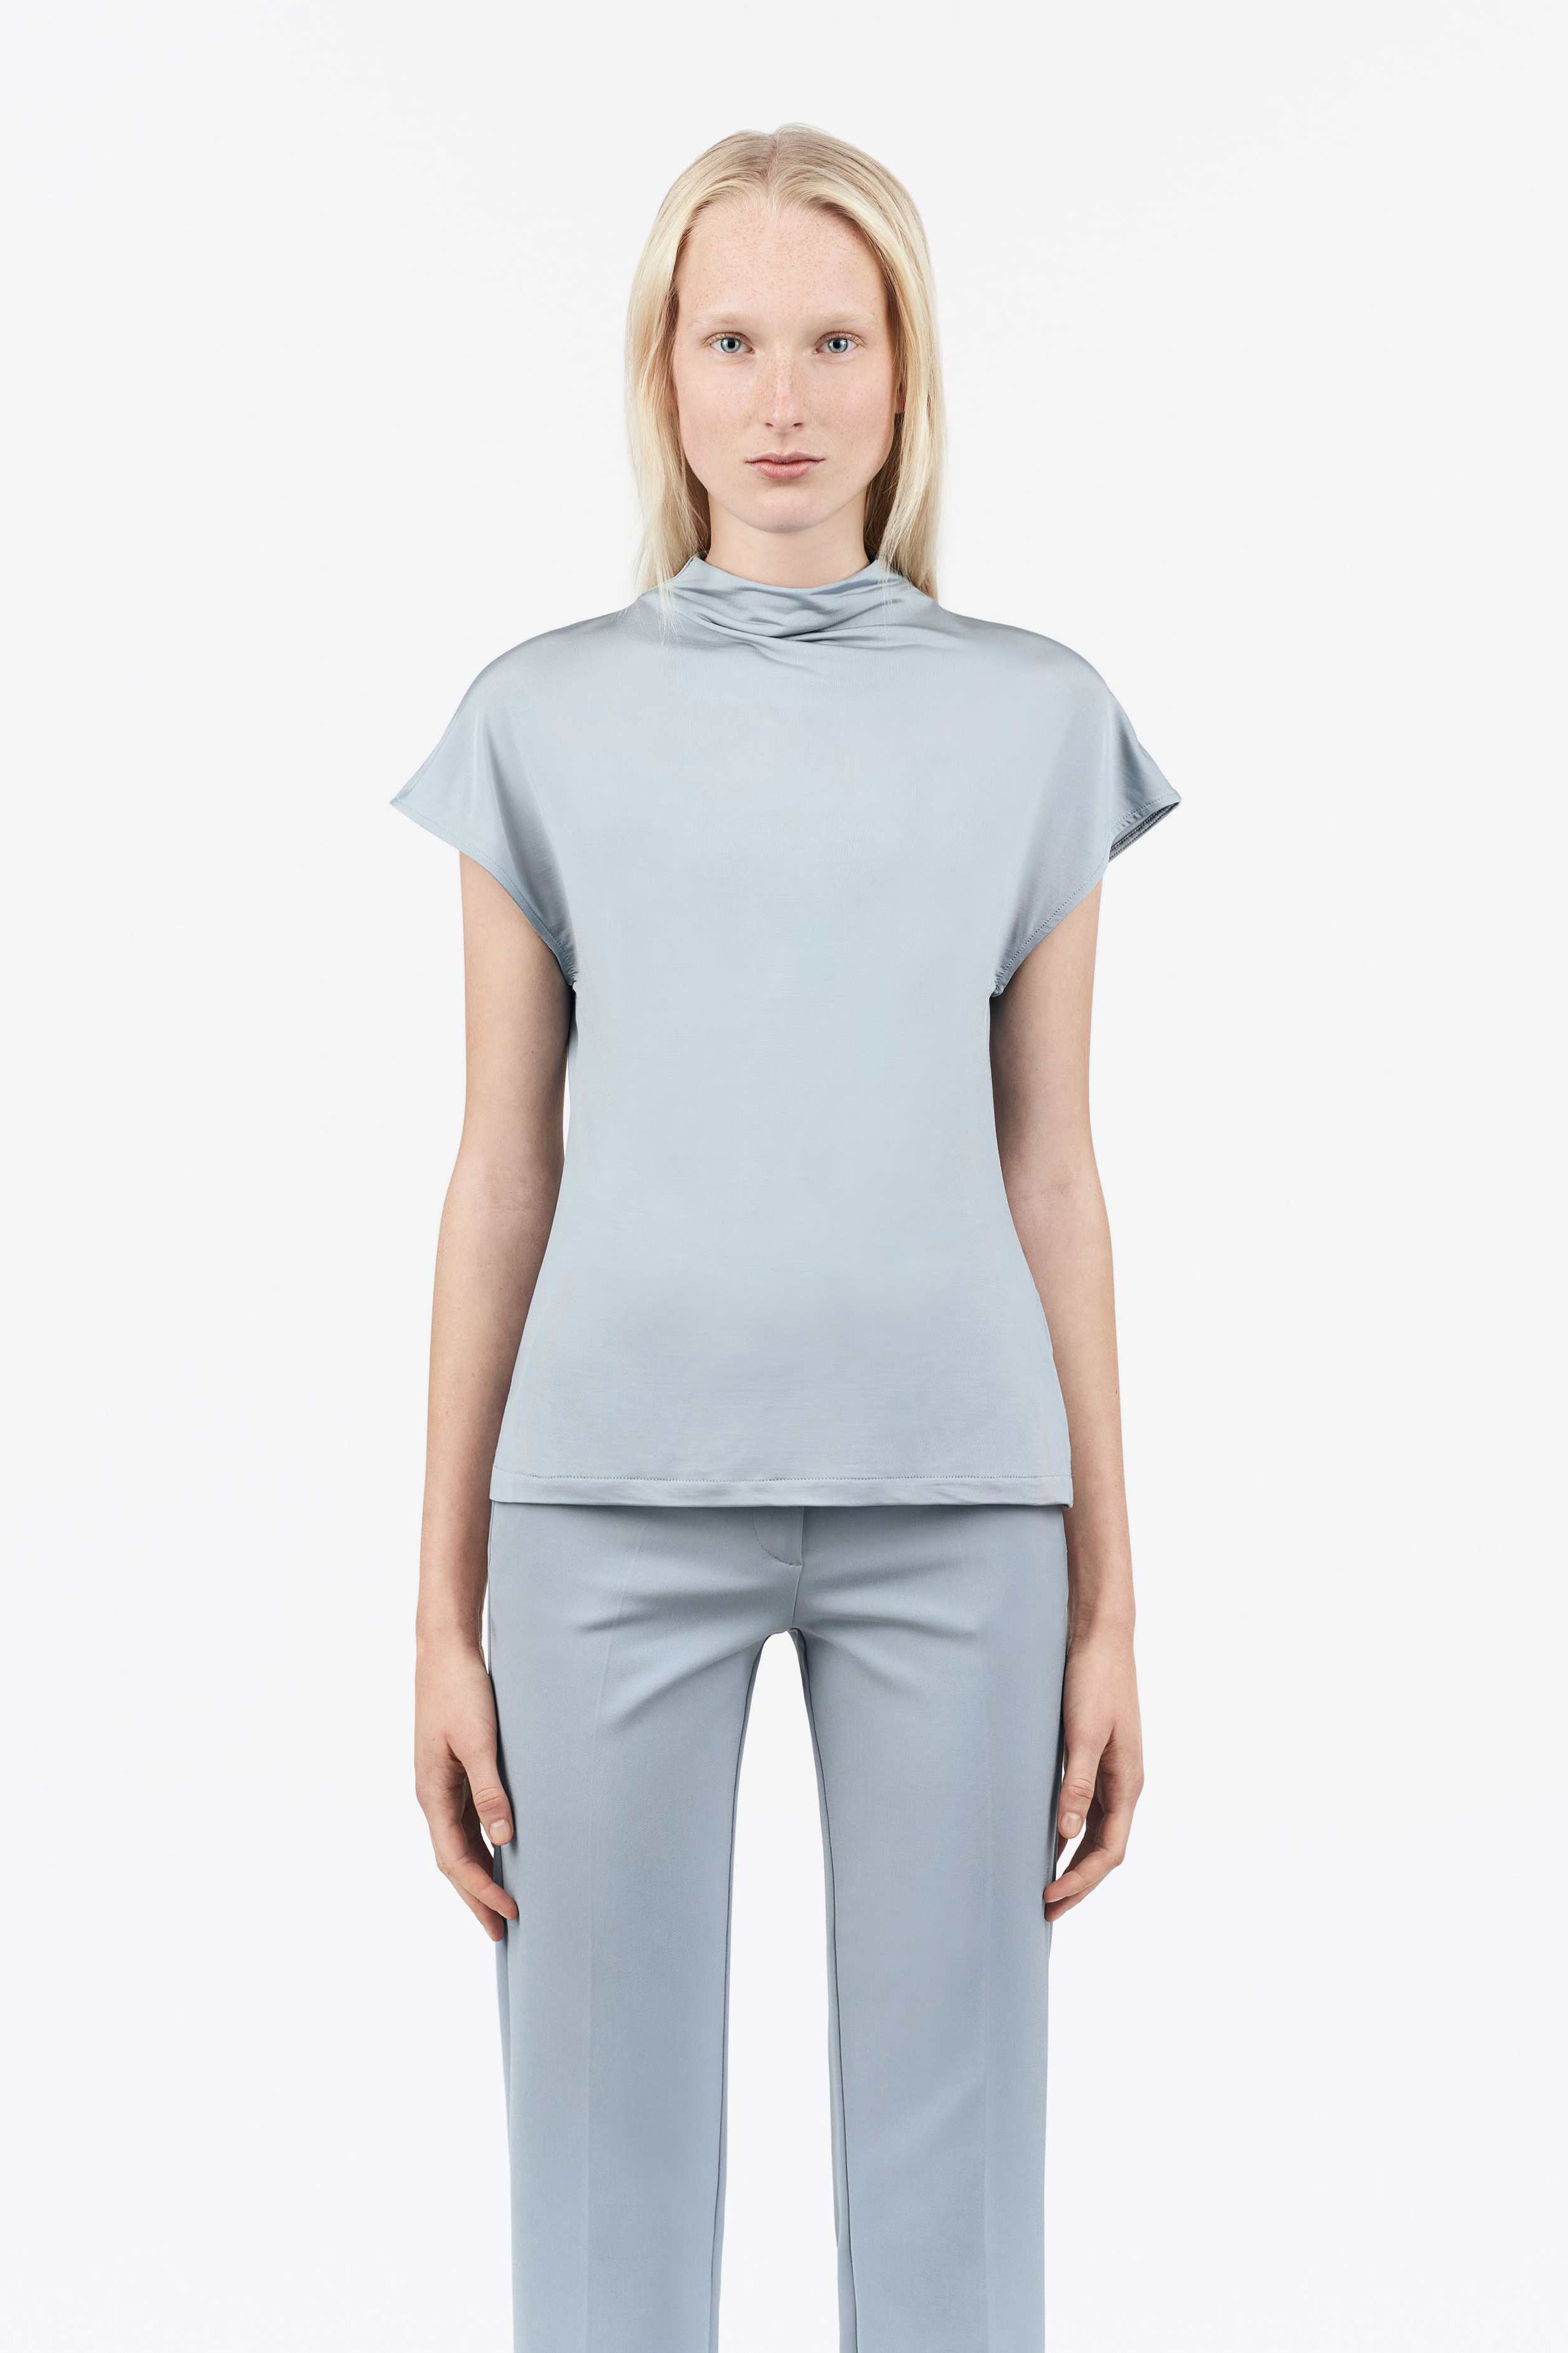 Alitta Shirt - Polar Blue